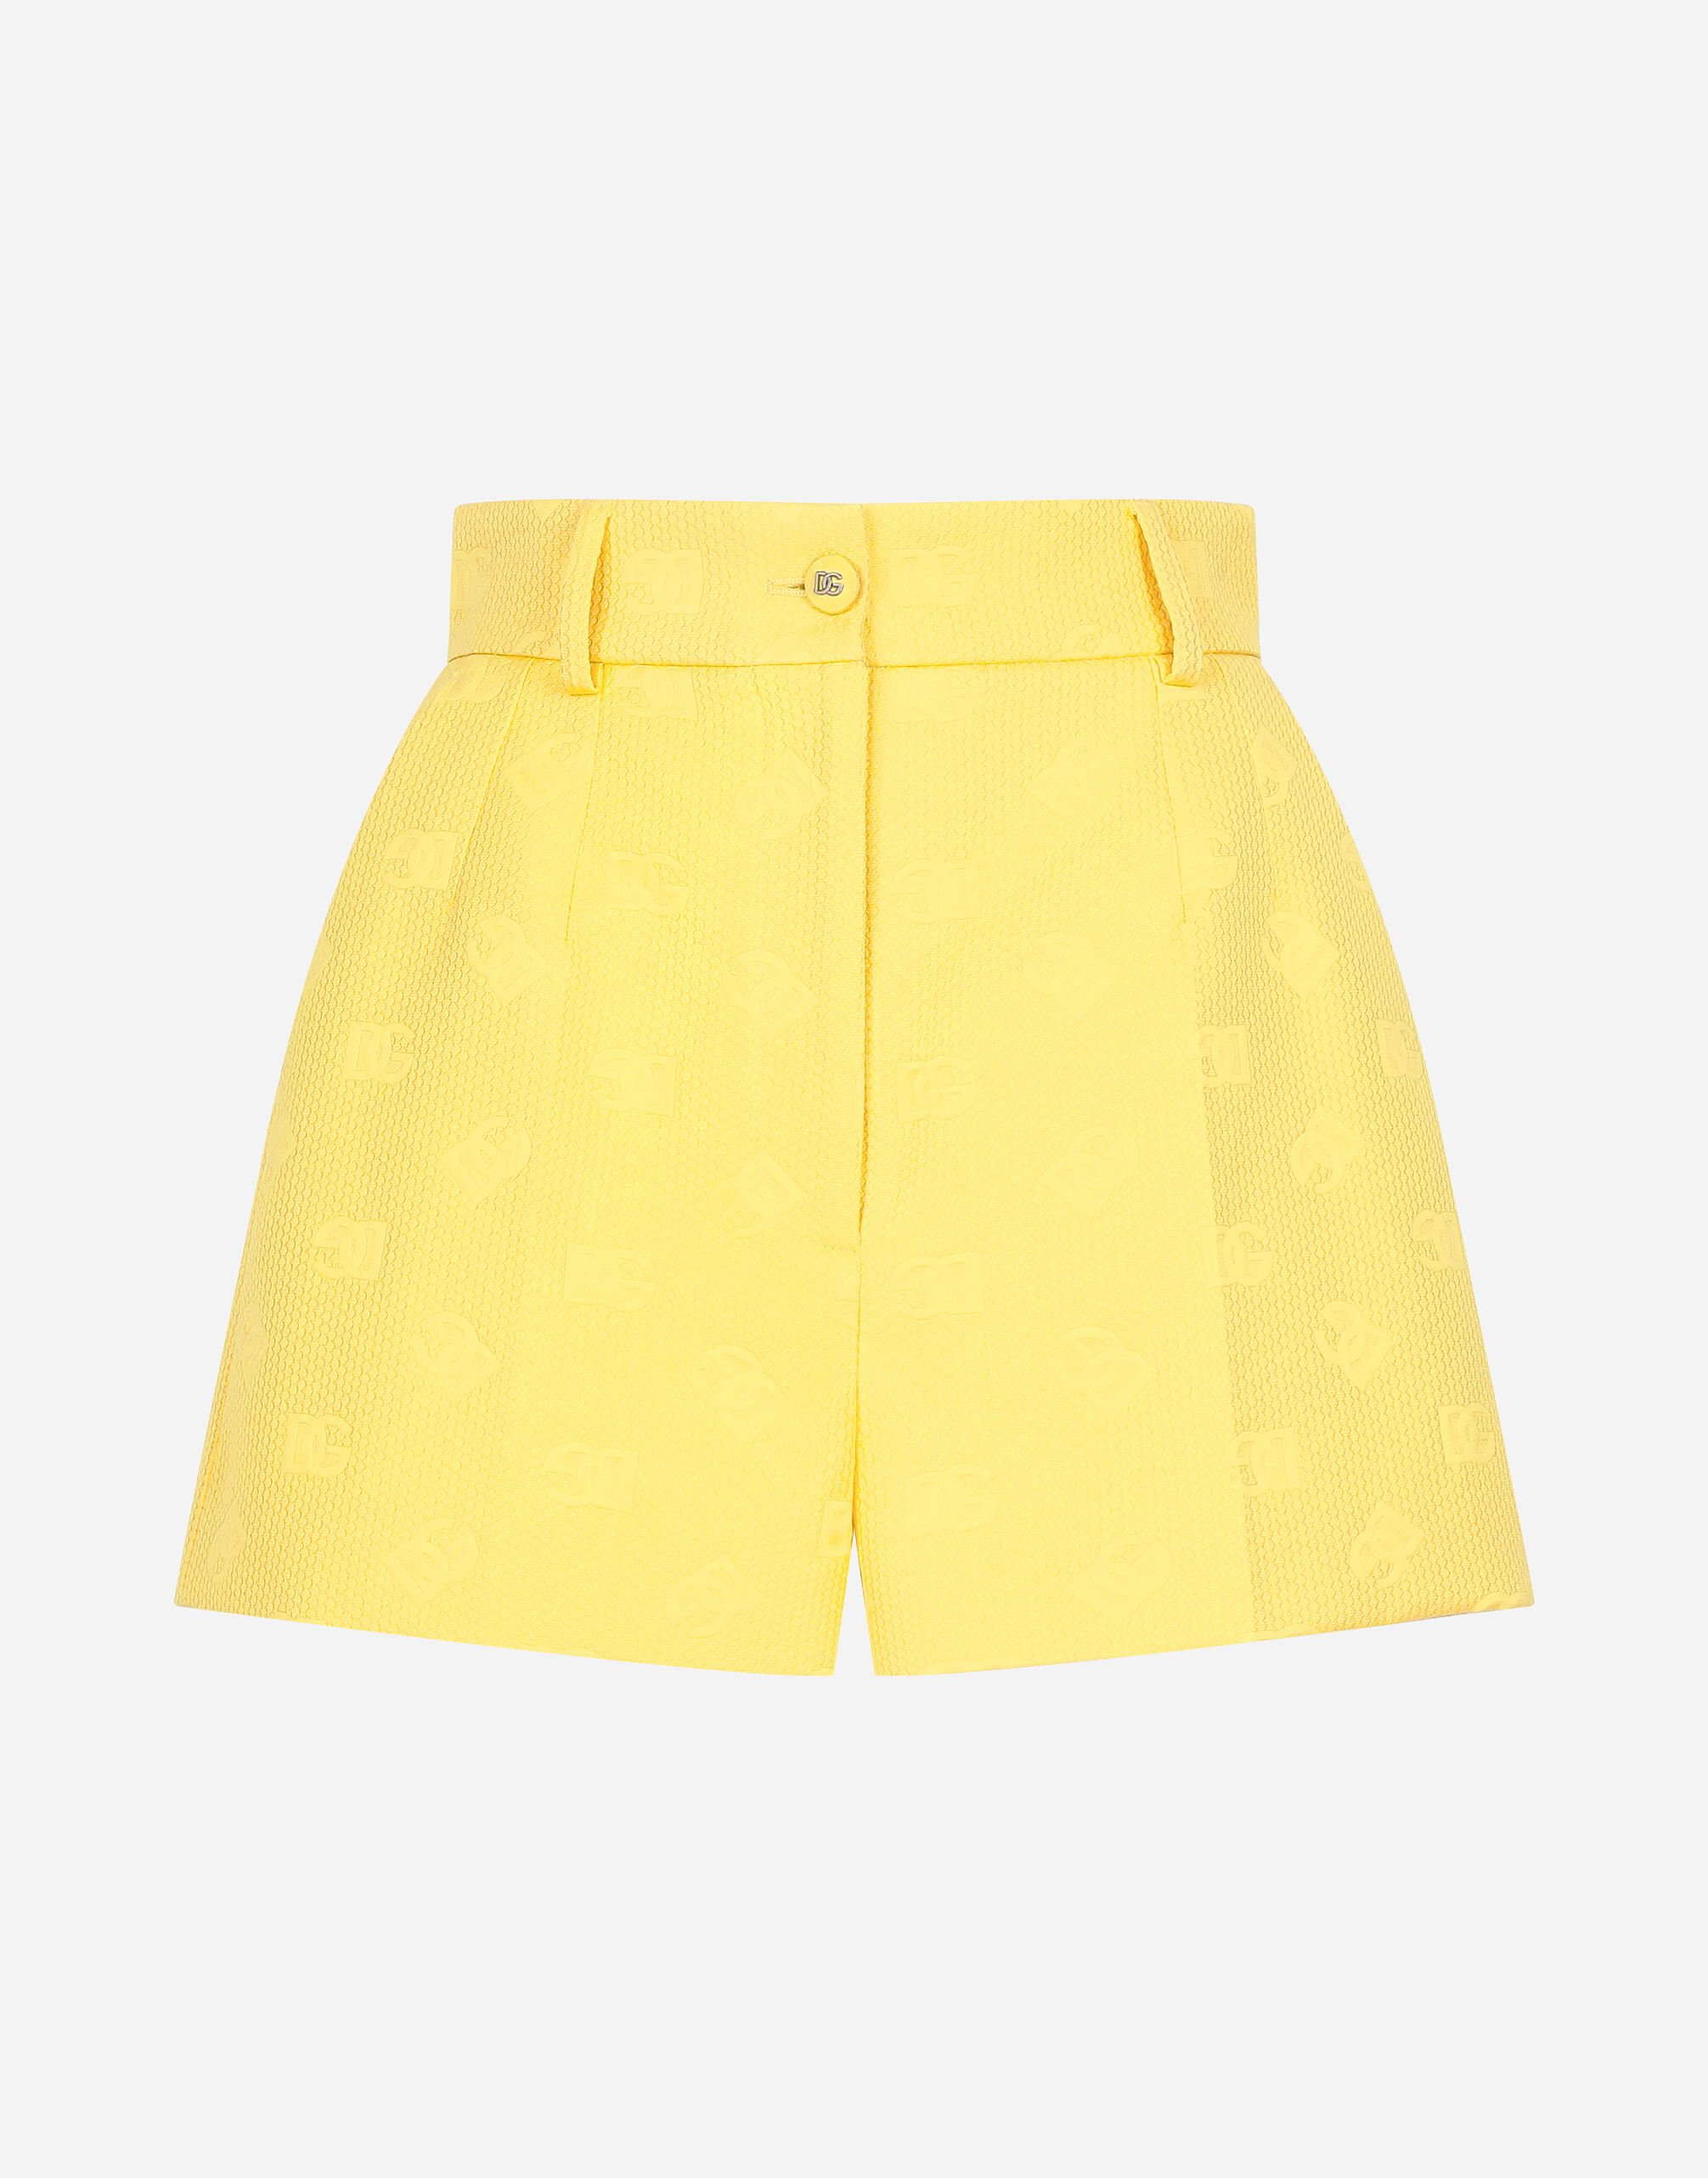 Dolce & Gabbana Jacquard shorts with all-over DG logo Yellow F29UCTHJMOK